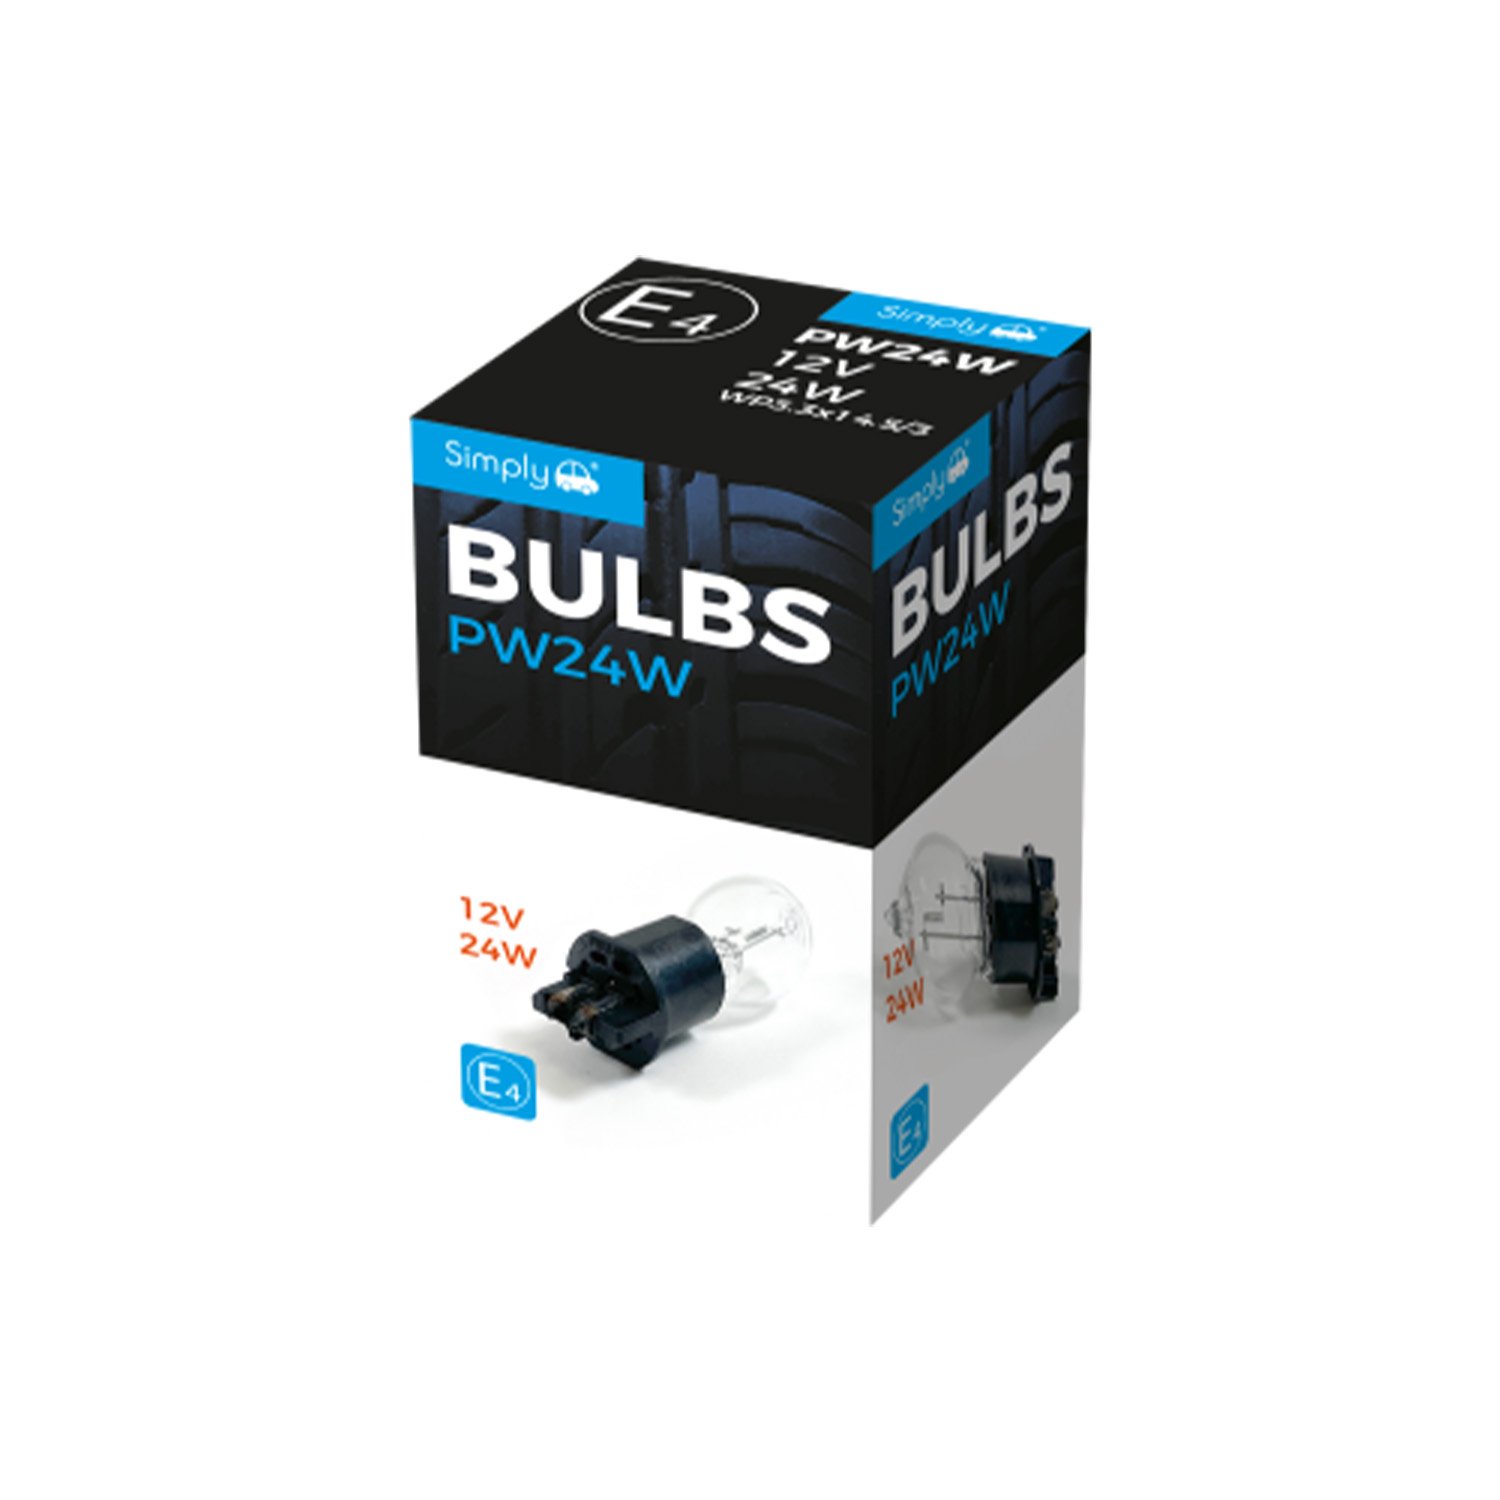 Bulb P21/4W 12V 8GD004772-121 by Hella - 2 Units